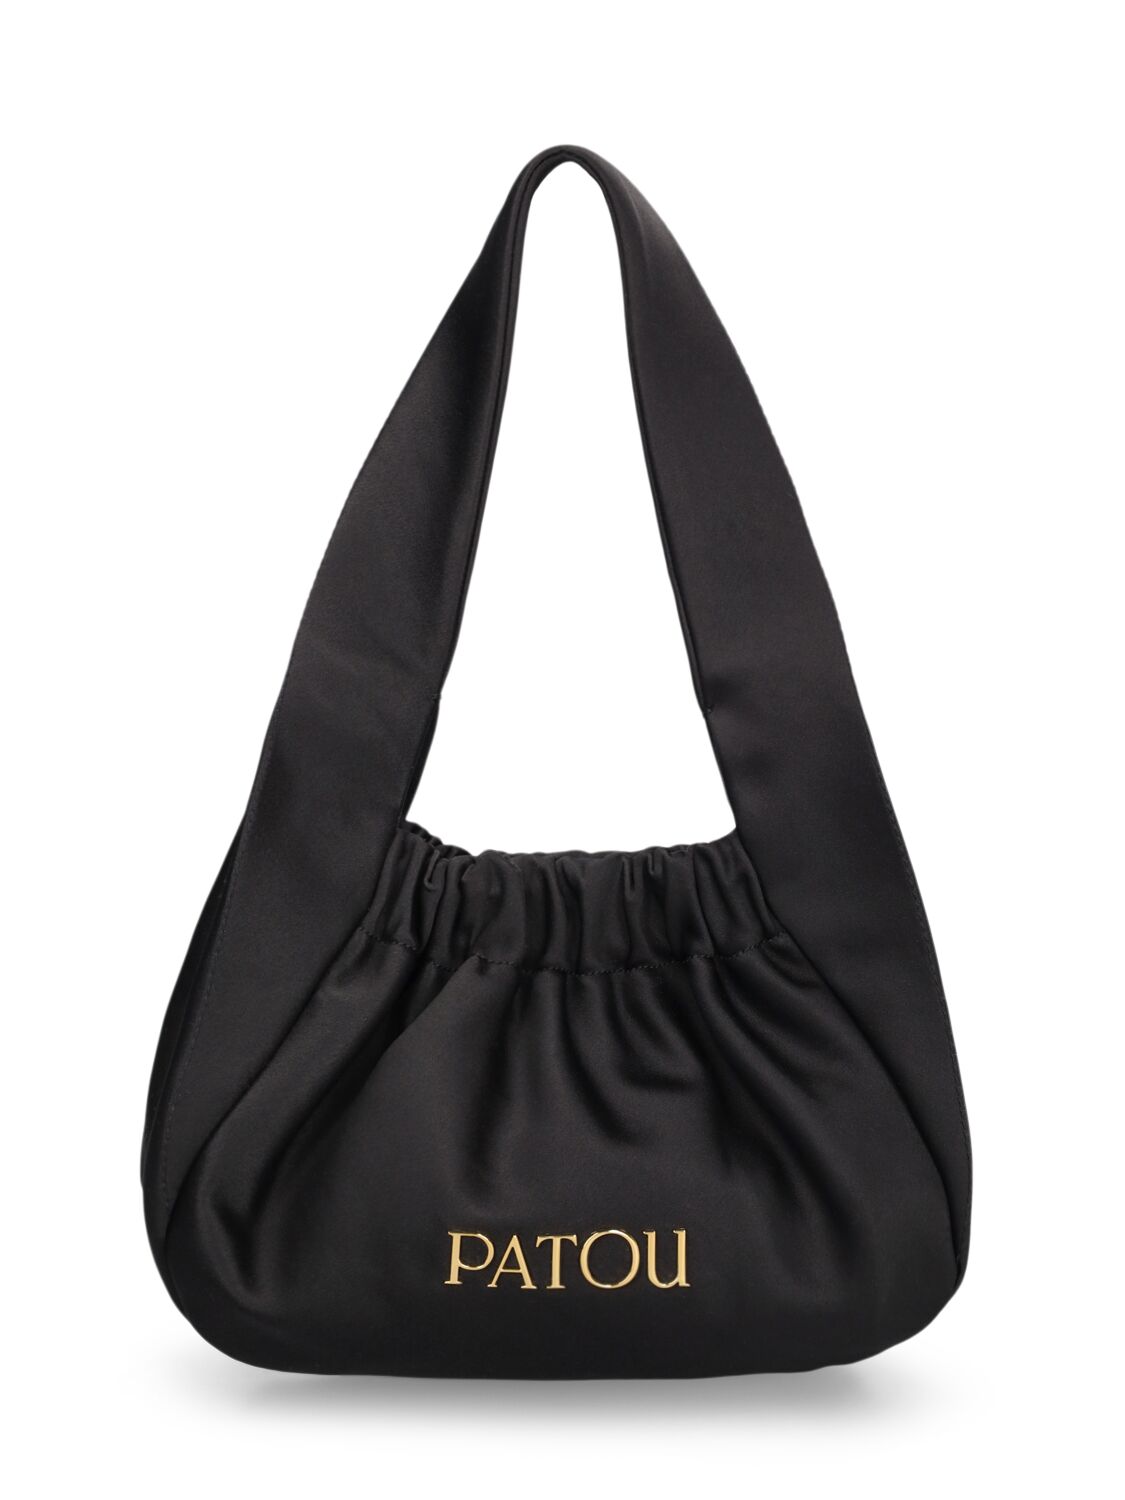 Patou Le Biscuit Pm Shoulder Bag In Black